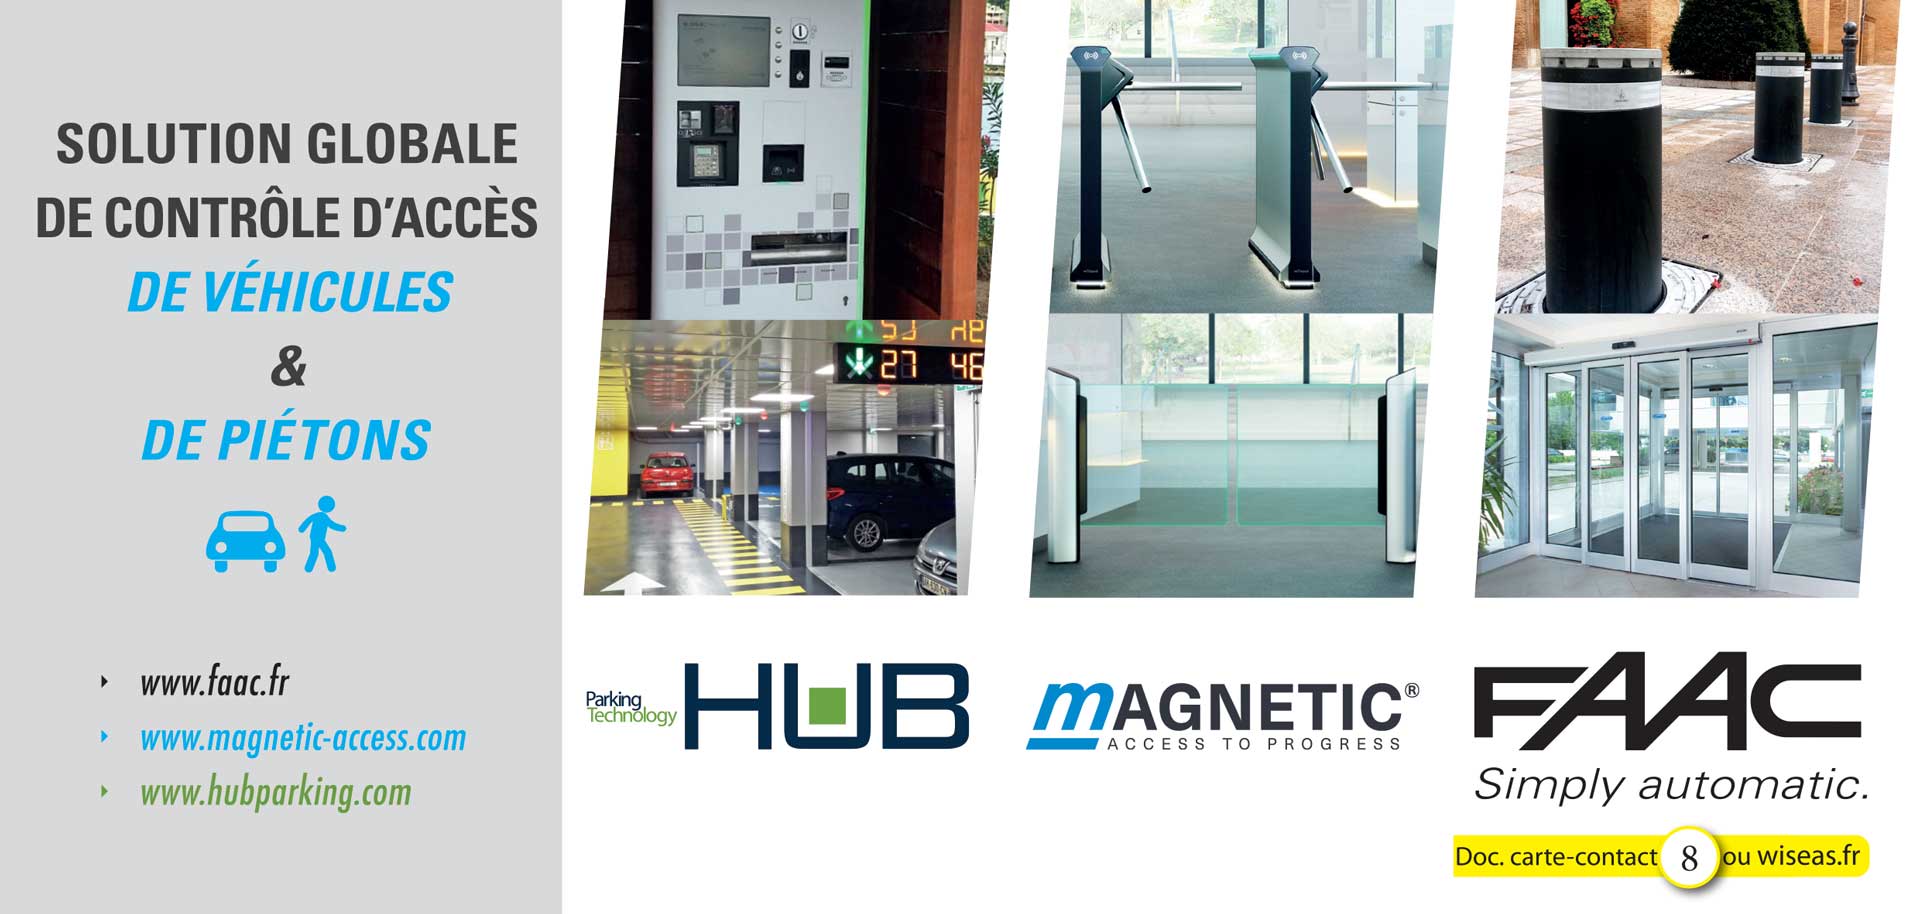 Hub, Magnetic Access